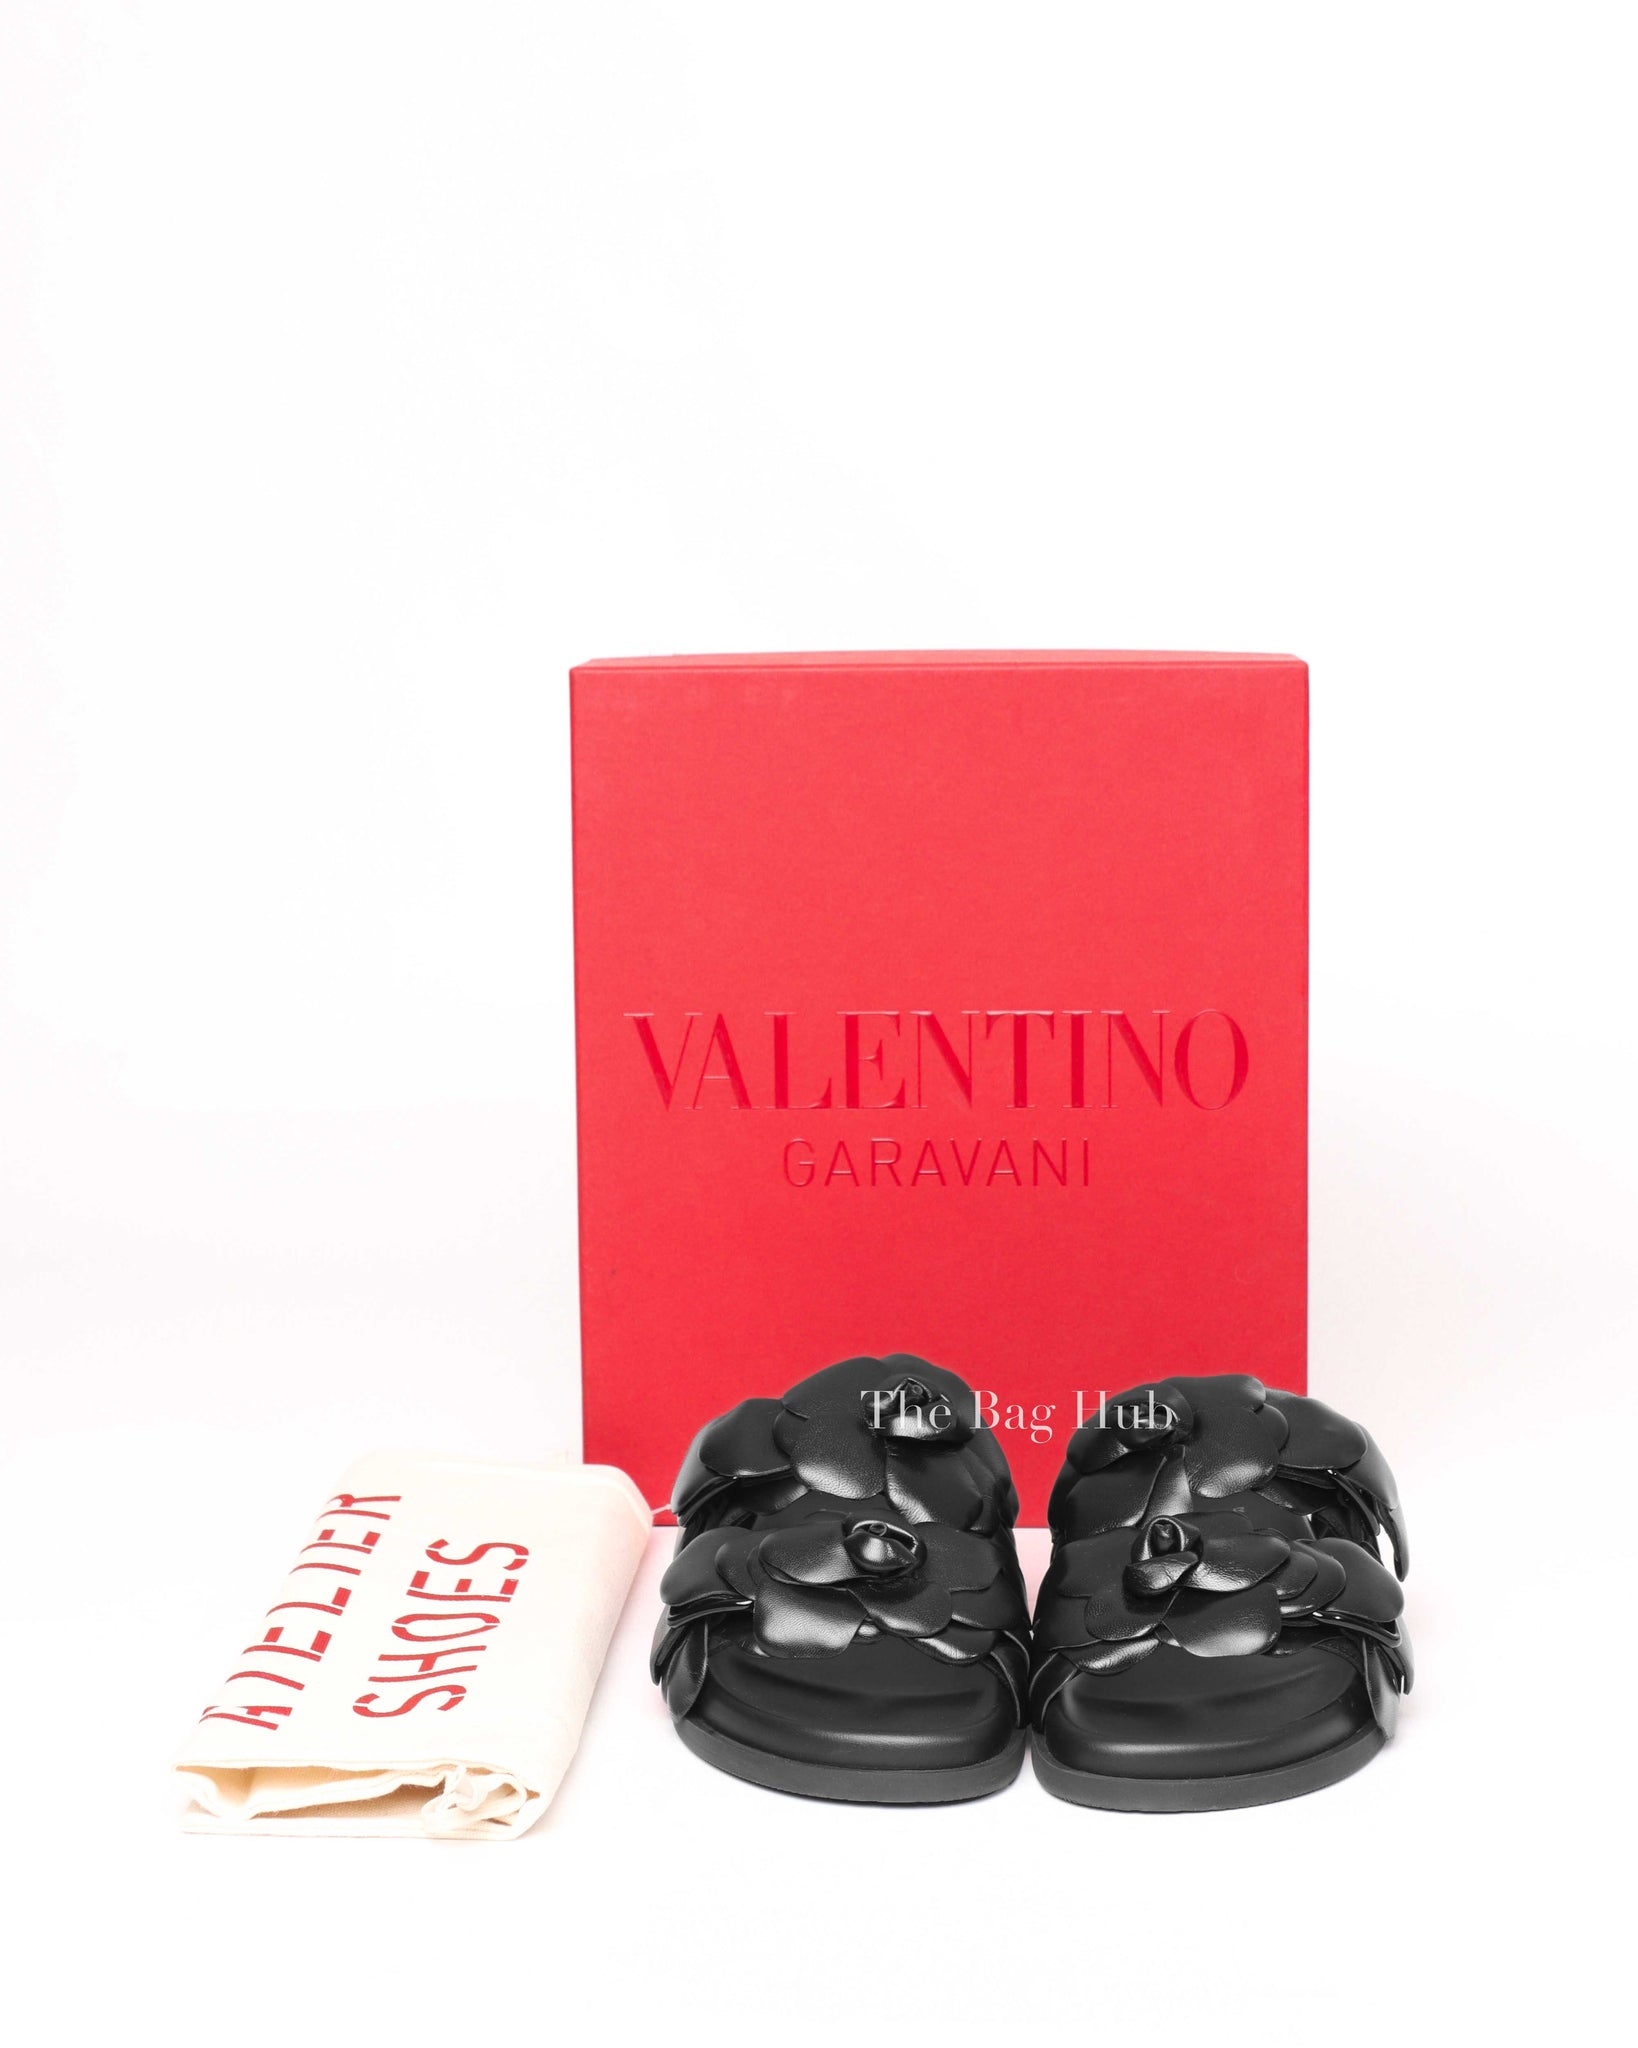 Valentino Black Leather Atelier 03 Rose Edition Slides Size 37.5-9